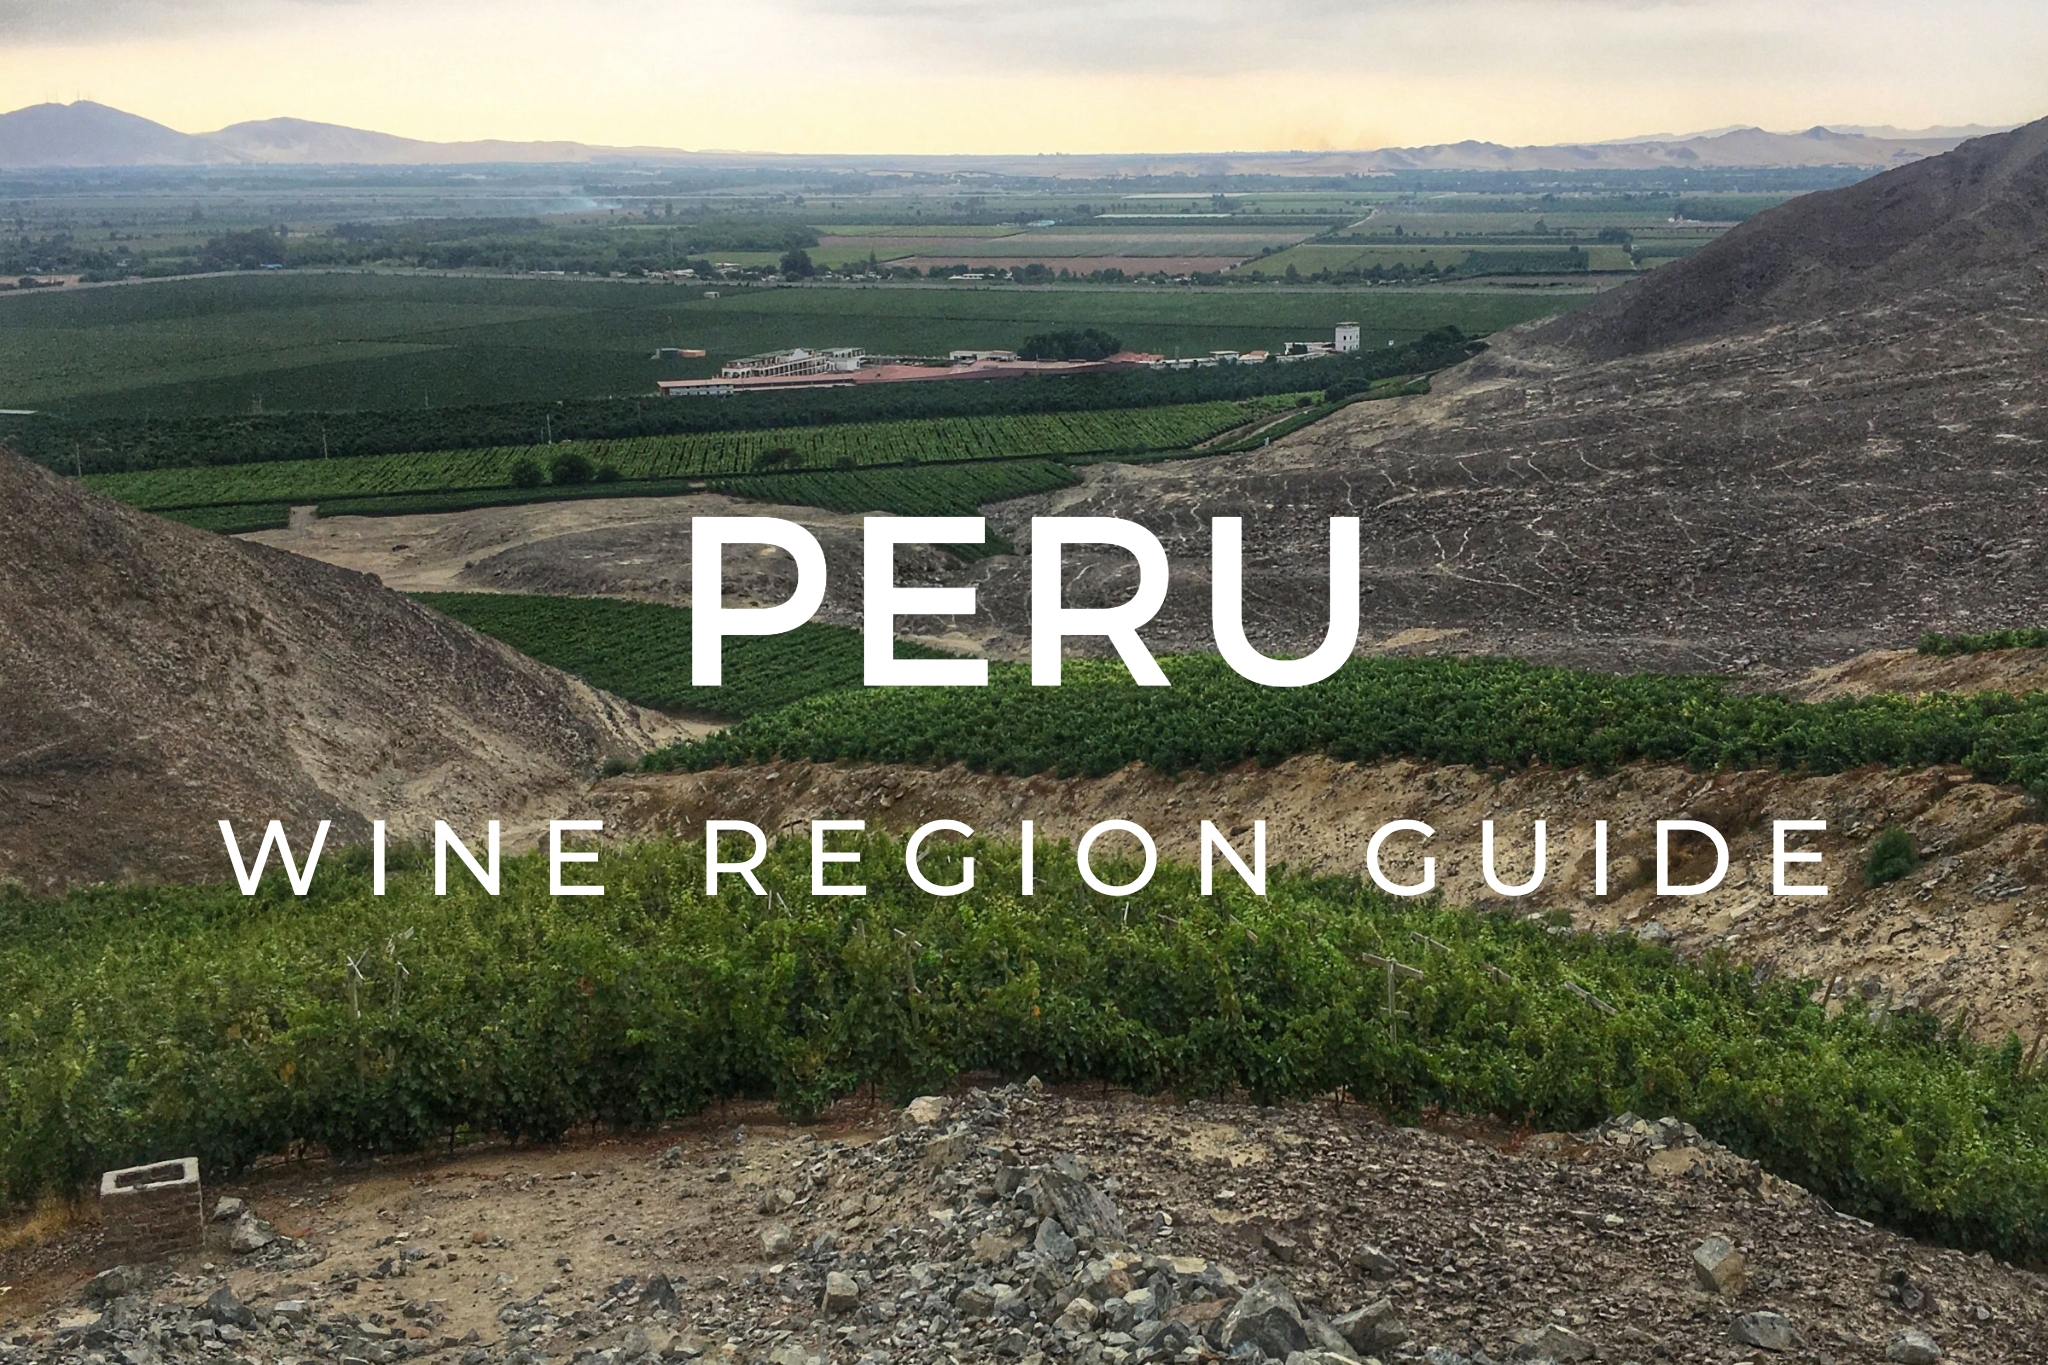 The wine regions of Peru: Lima, Ica, Arequipa, Moquegua, Tacna.